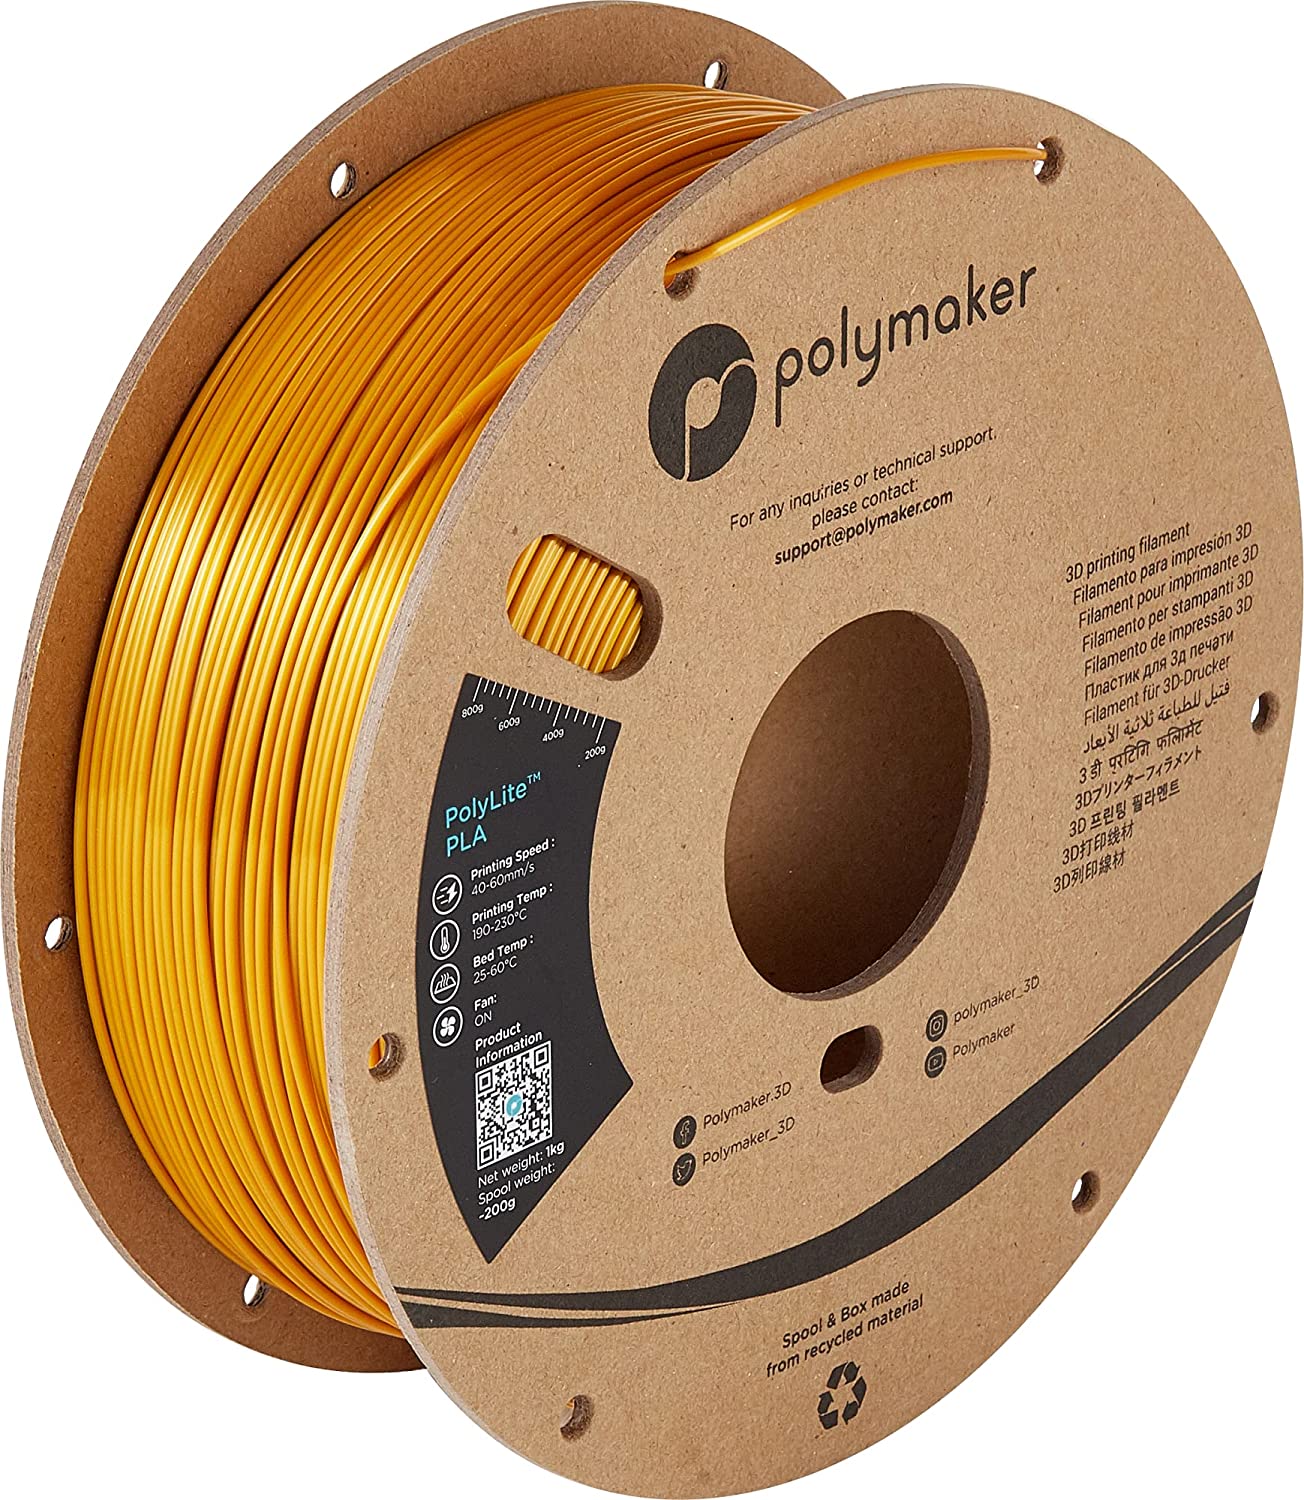 PolyLite™ PLA (formerly PolyPlus™) PLA